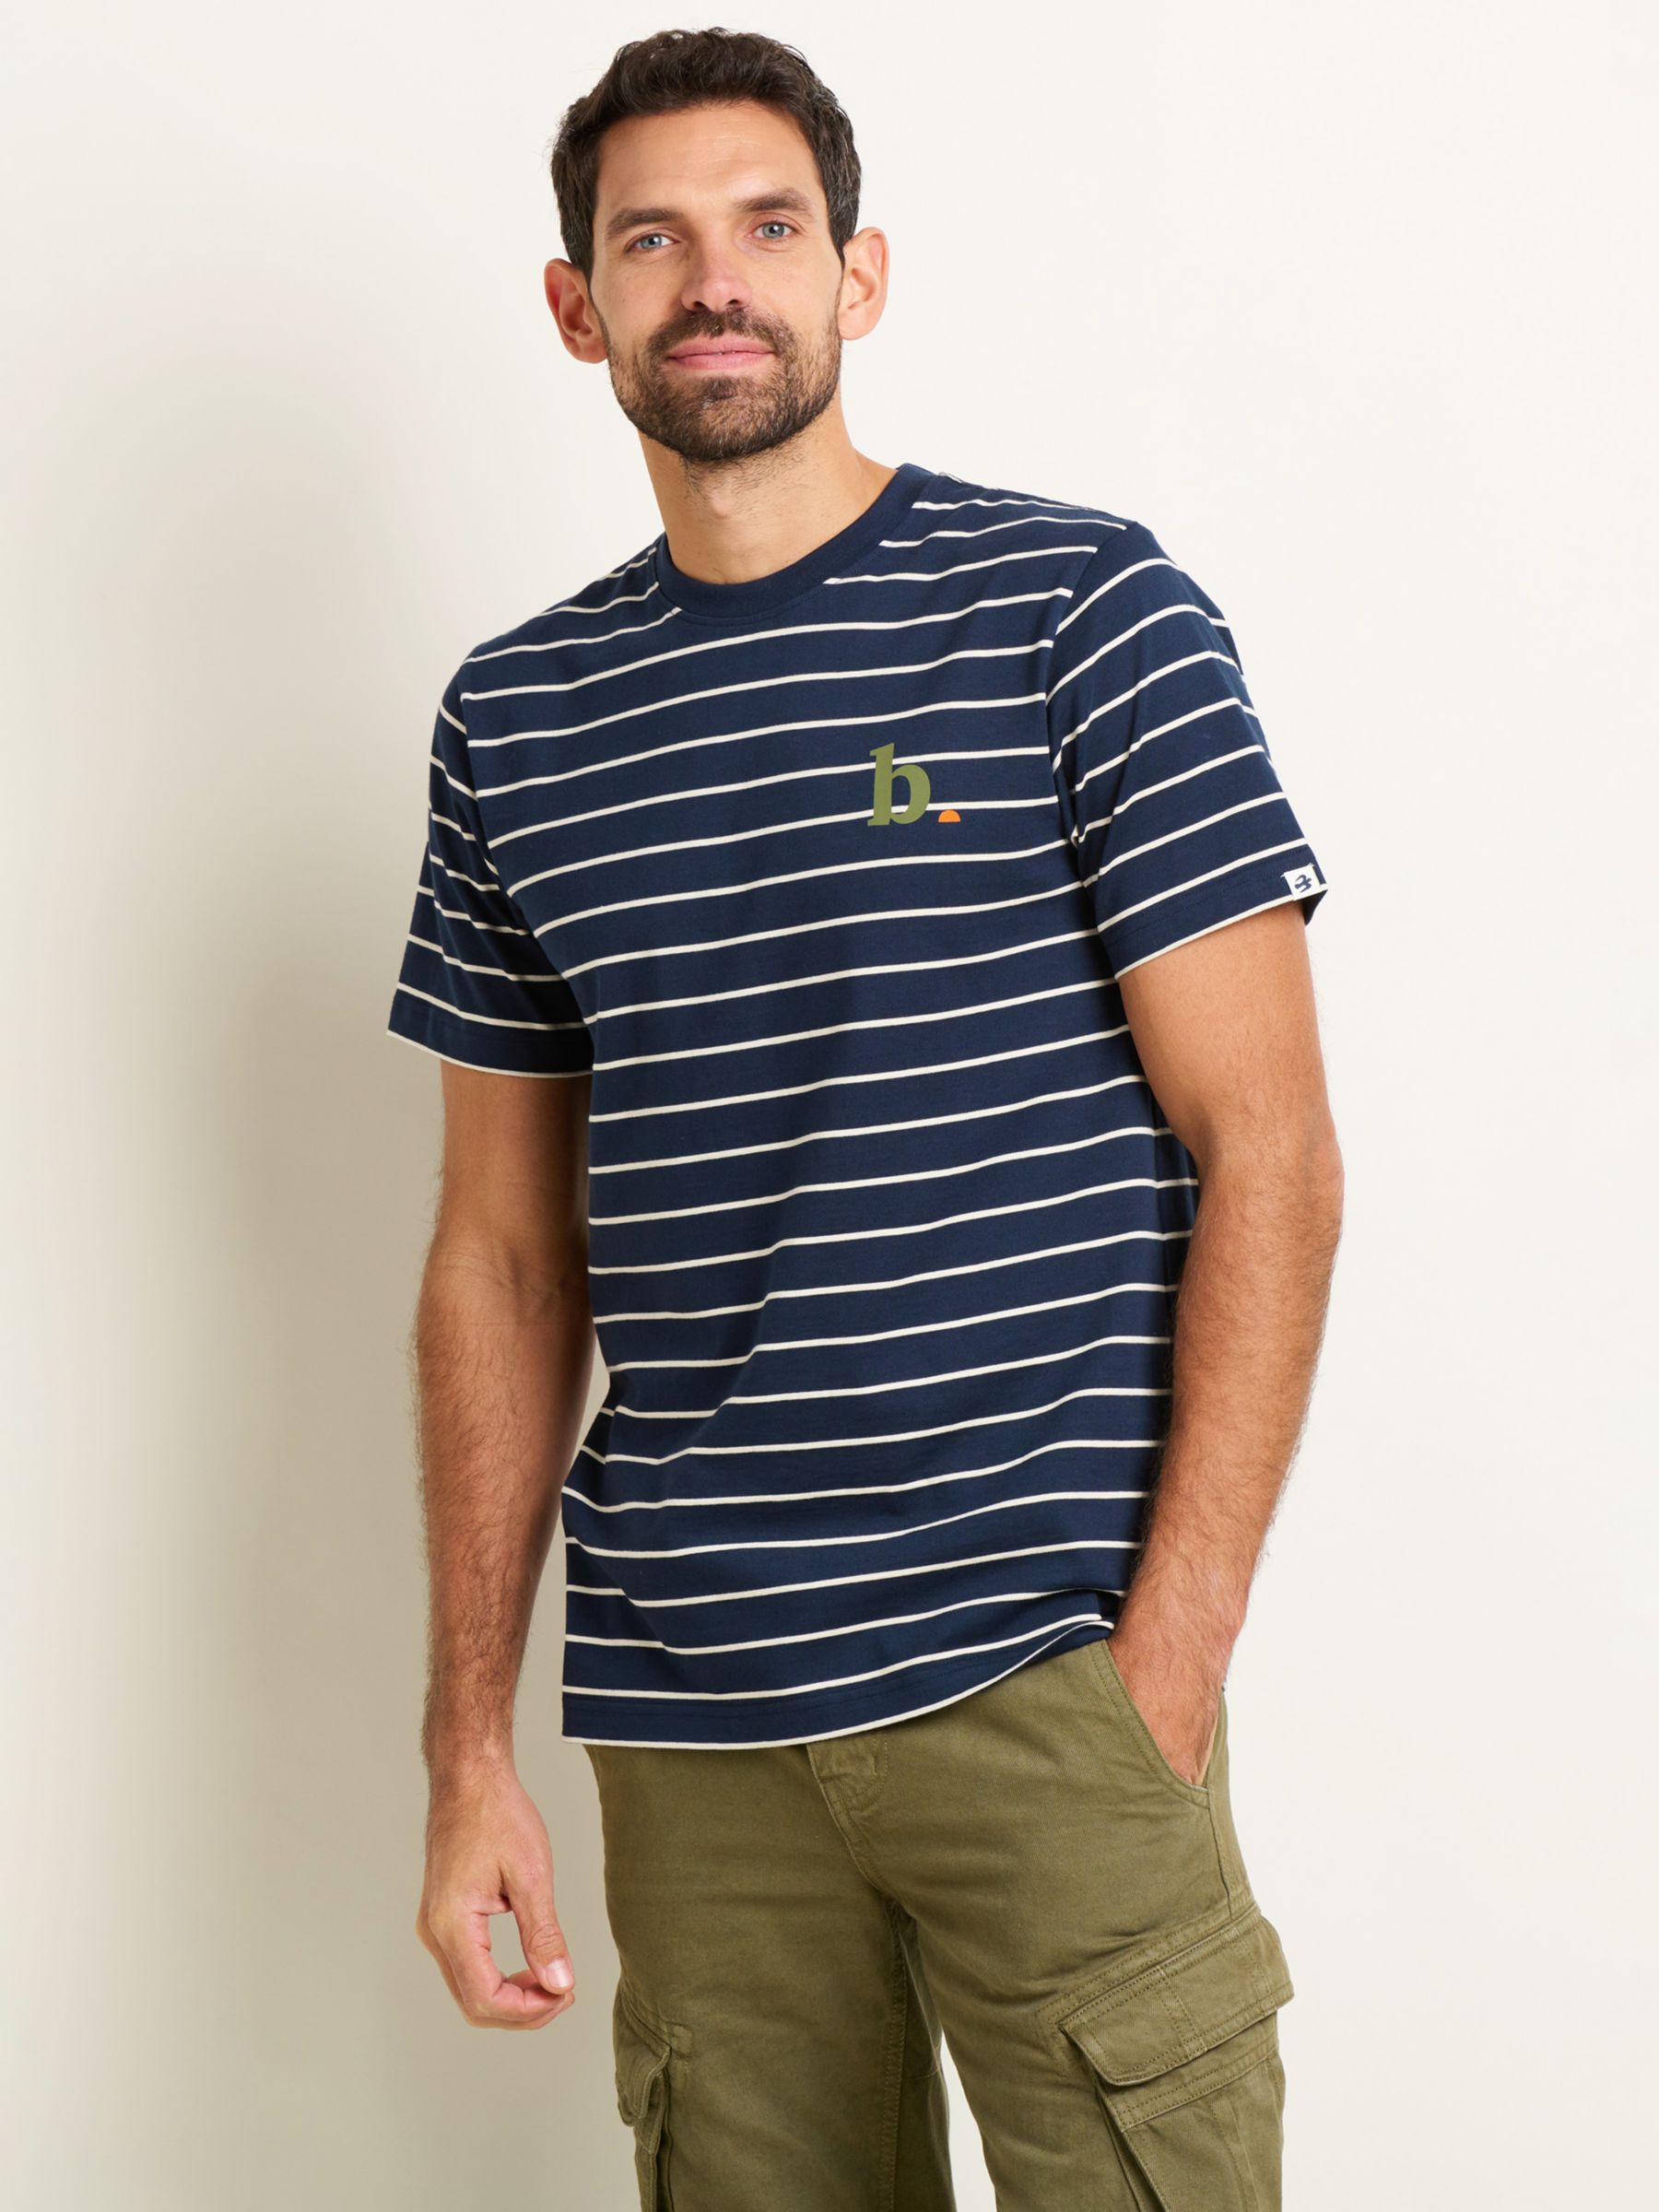 Brakeburn Stripe Pocket T-Shirt, Navy, L